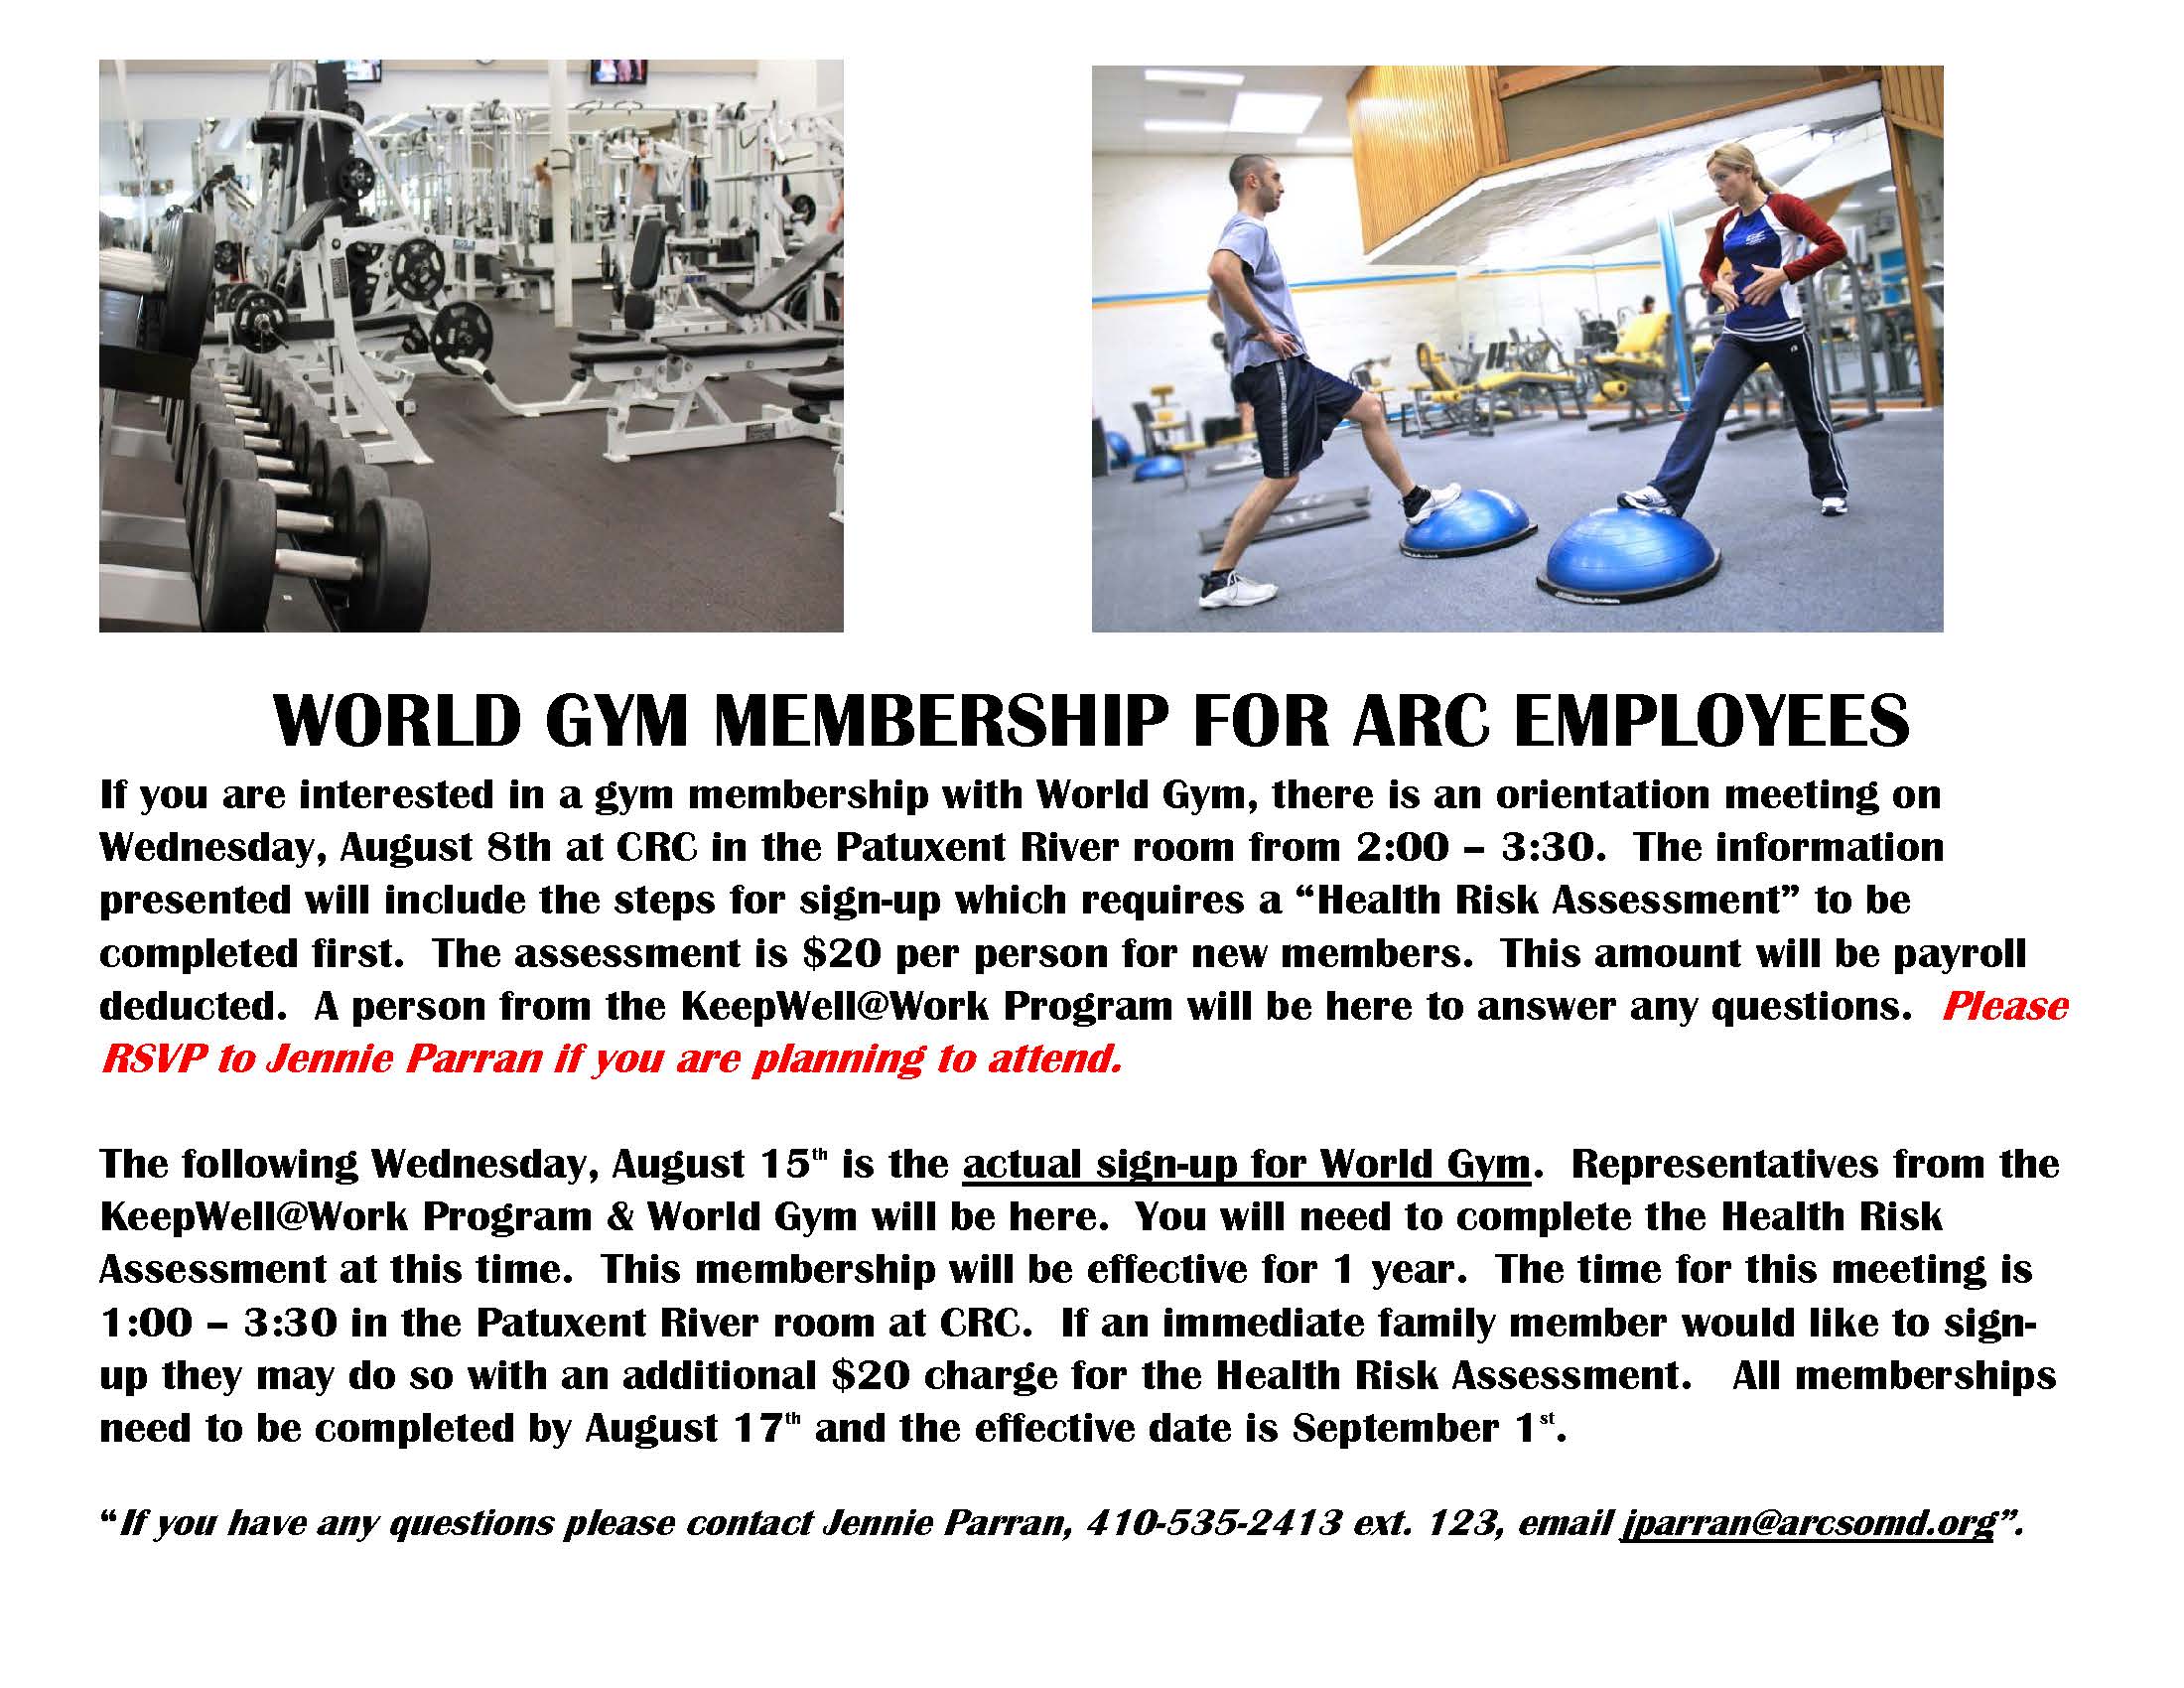 Employee Gym Membership Orientation The Arc Southern Maryland 